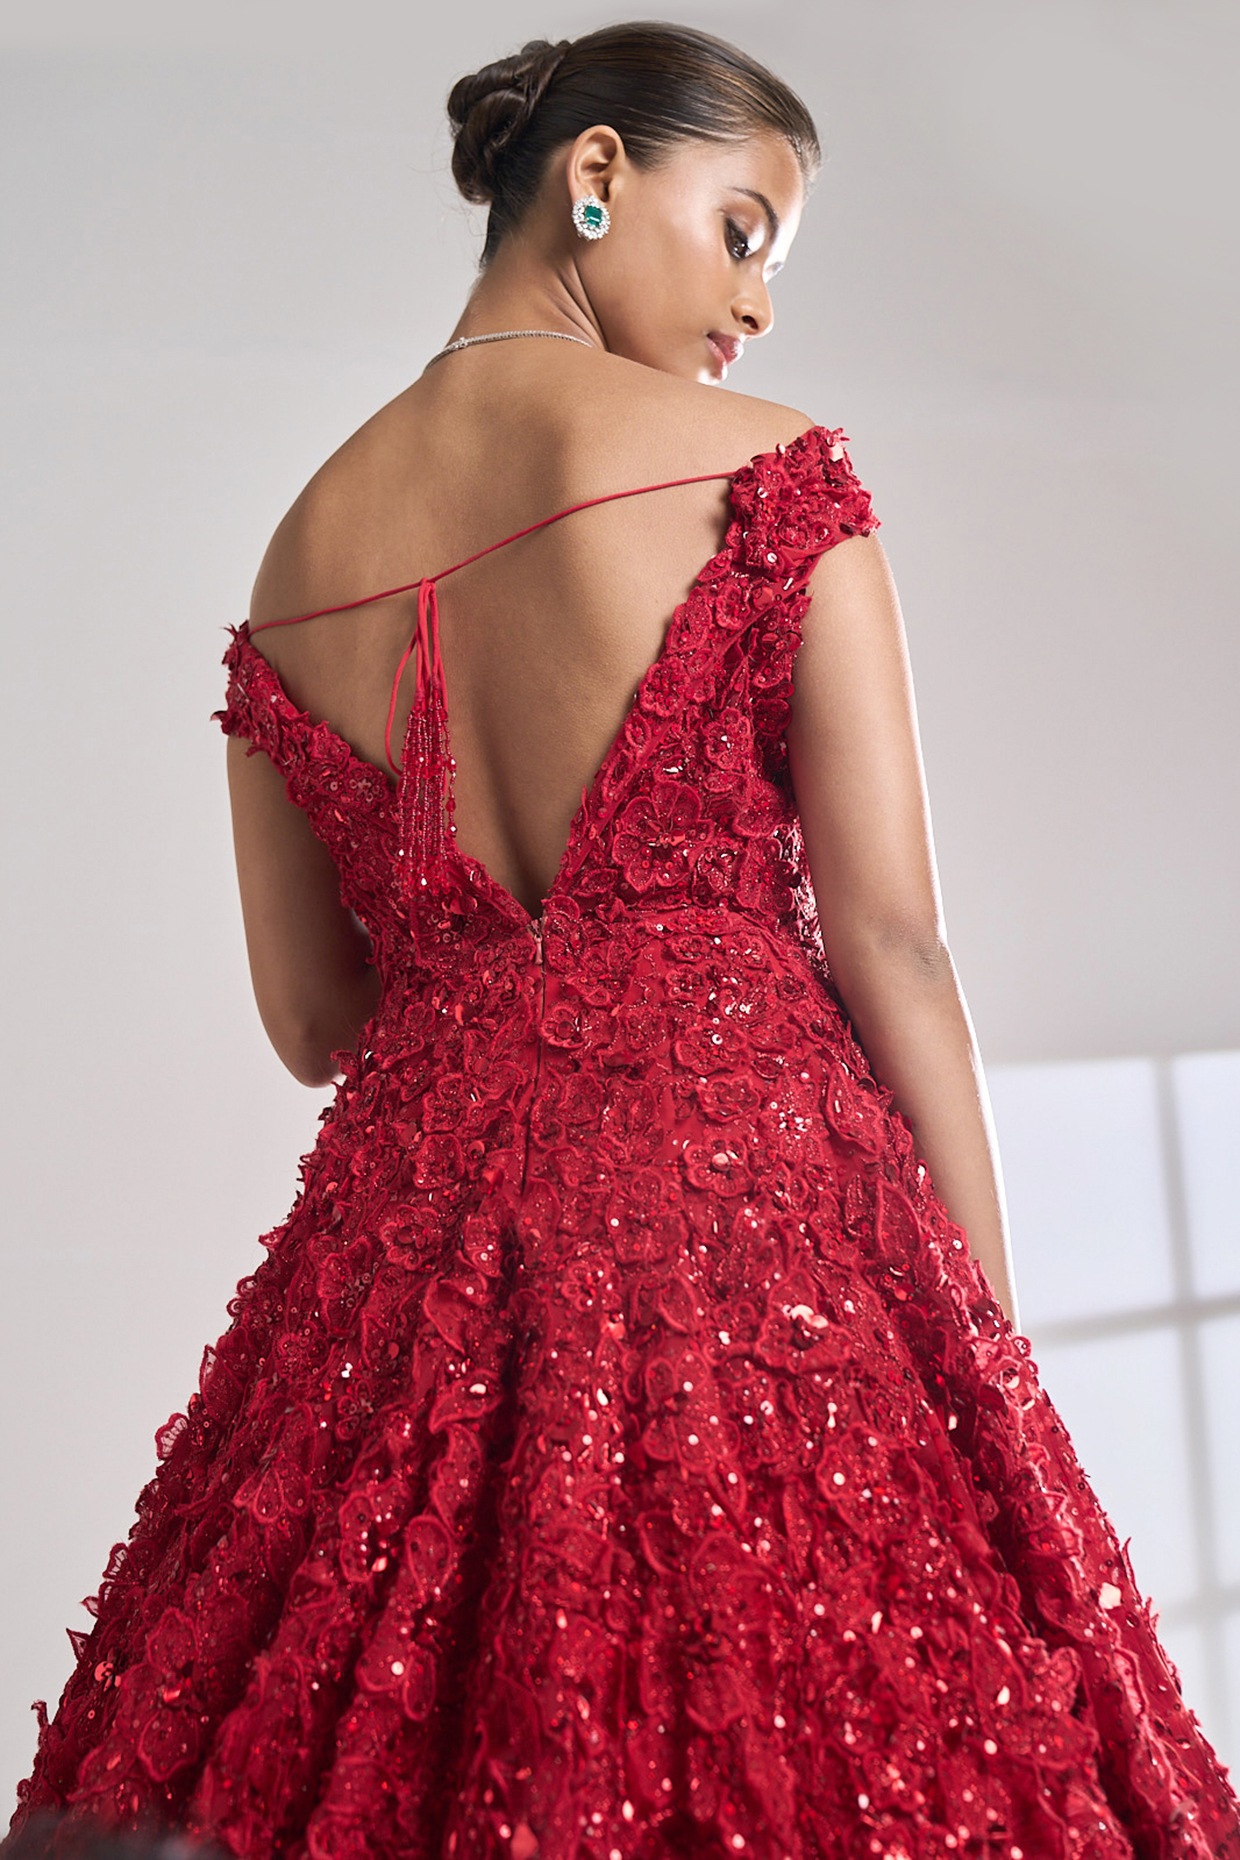 Alisandra Wedding Gown: Dark Versions in Red and Purple - Wishbox